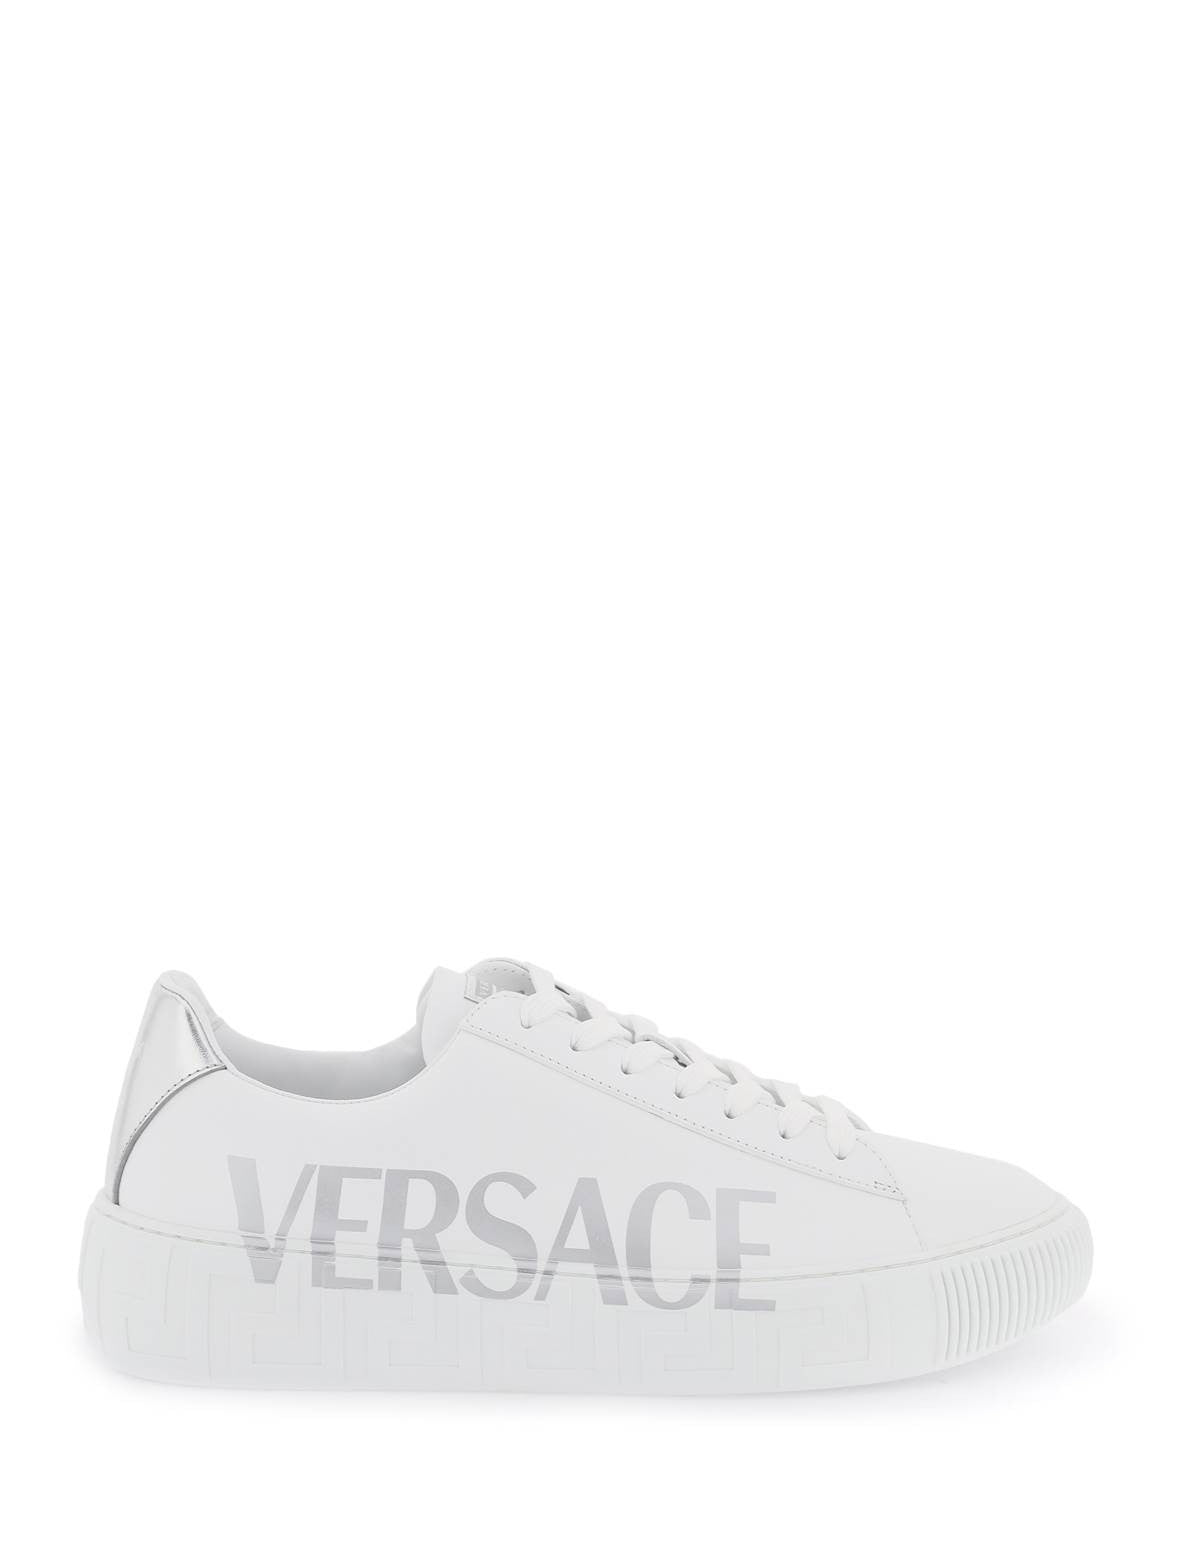 versace-greca-sneakers-with-logo.jpg